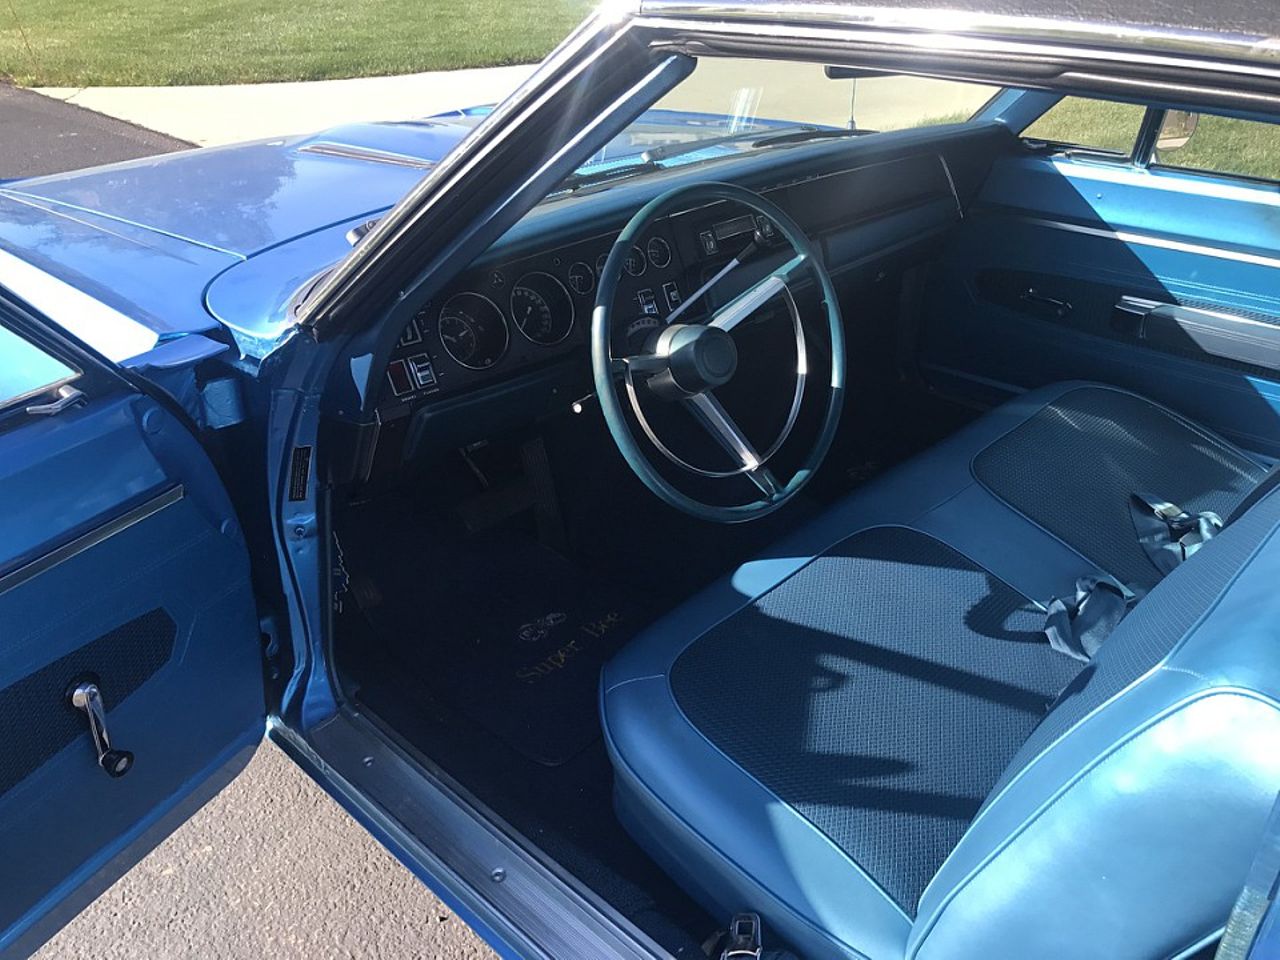 1968 Dodge Super Bee | Sioux Falls, SD, Blue, Rear Wheel